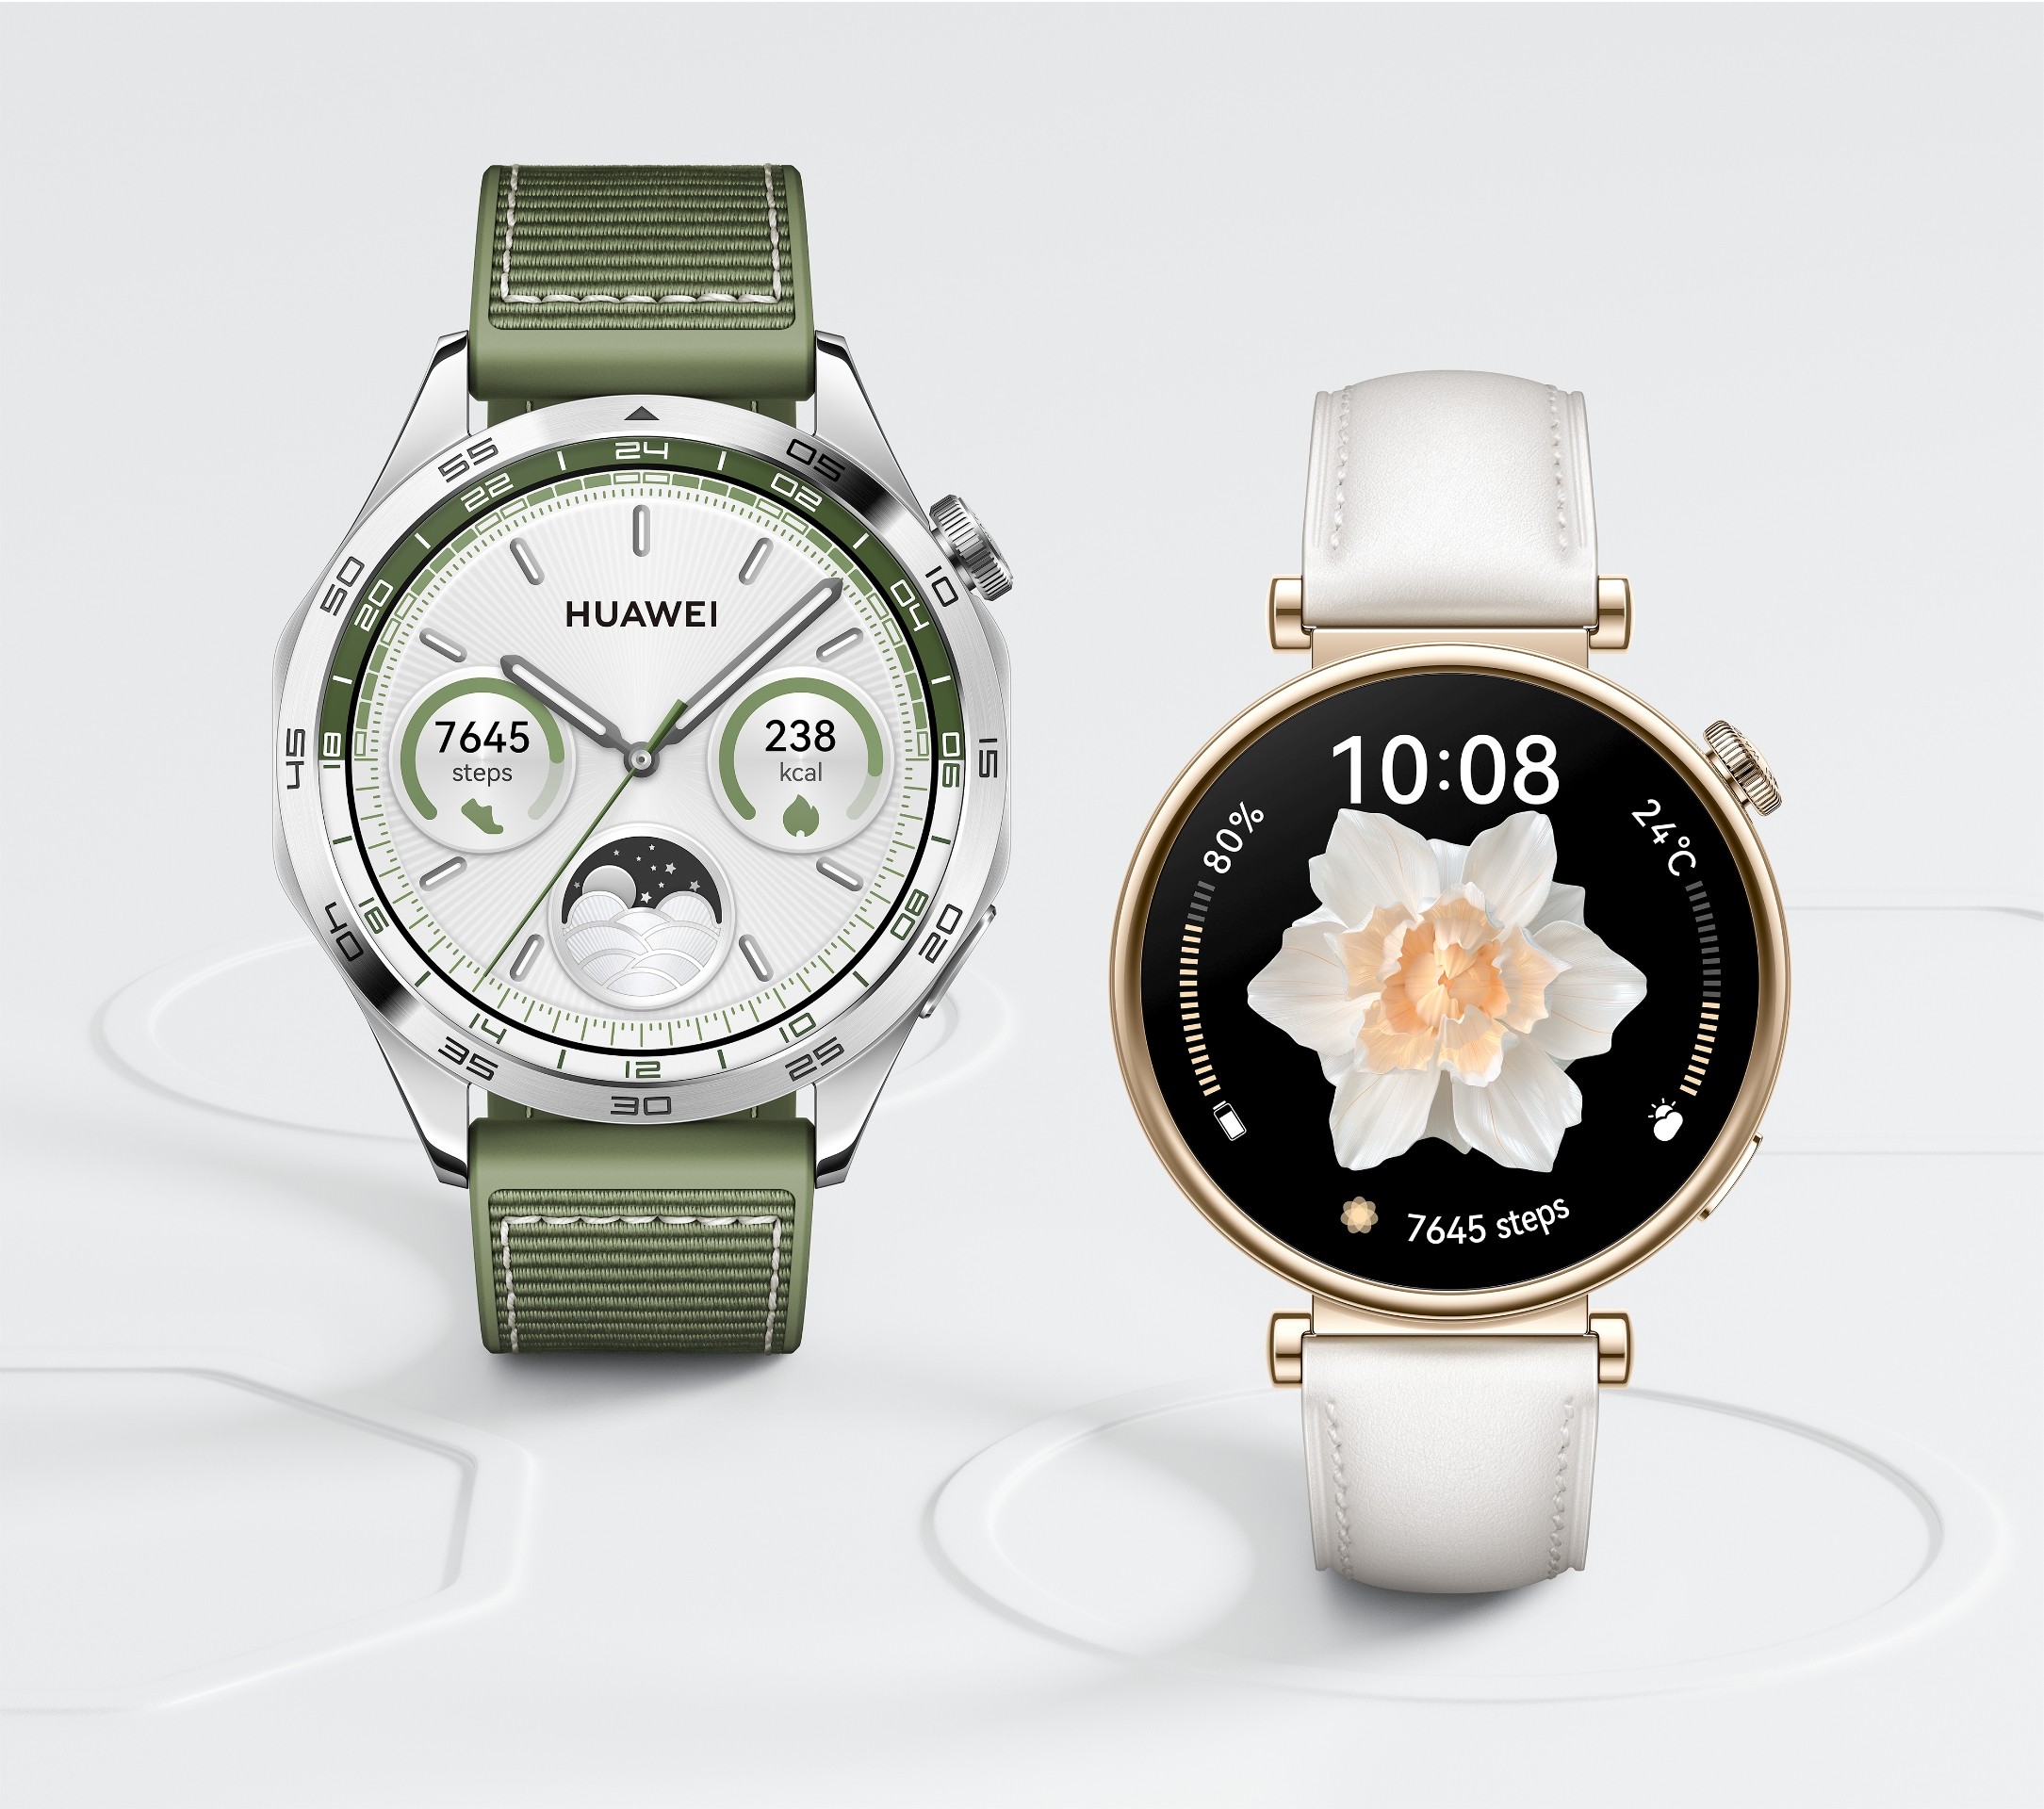 Huawei Watch GT 4 erhält HarmonyOS 4.0.0.139: Was ist neu?